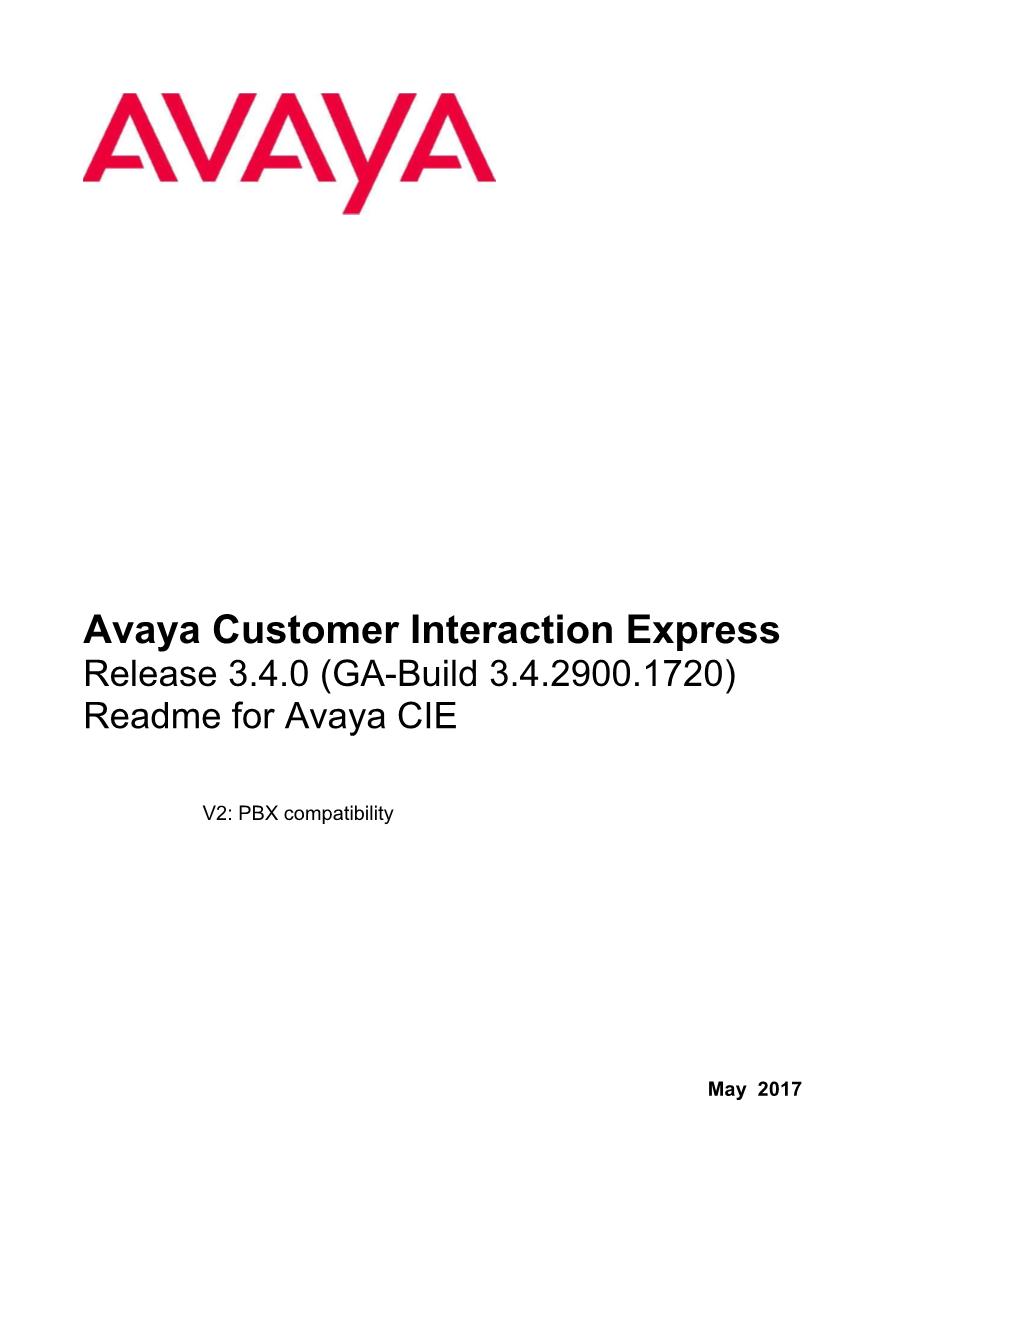 Avaya Customer Interaction Express Release 3.4.0 (GA-Build 3.4.2900.1720) Readme for Avaya CIE